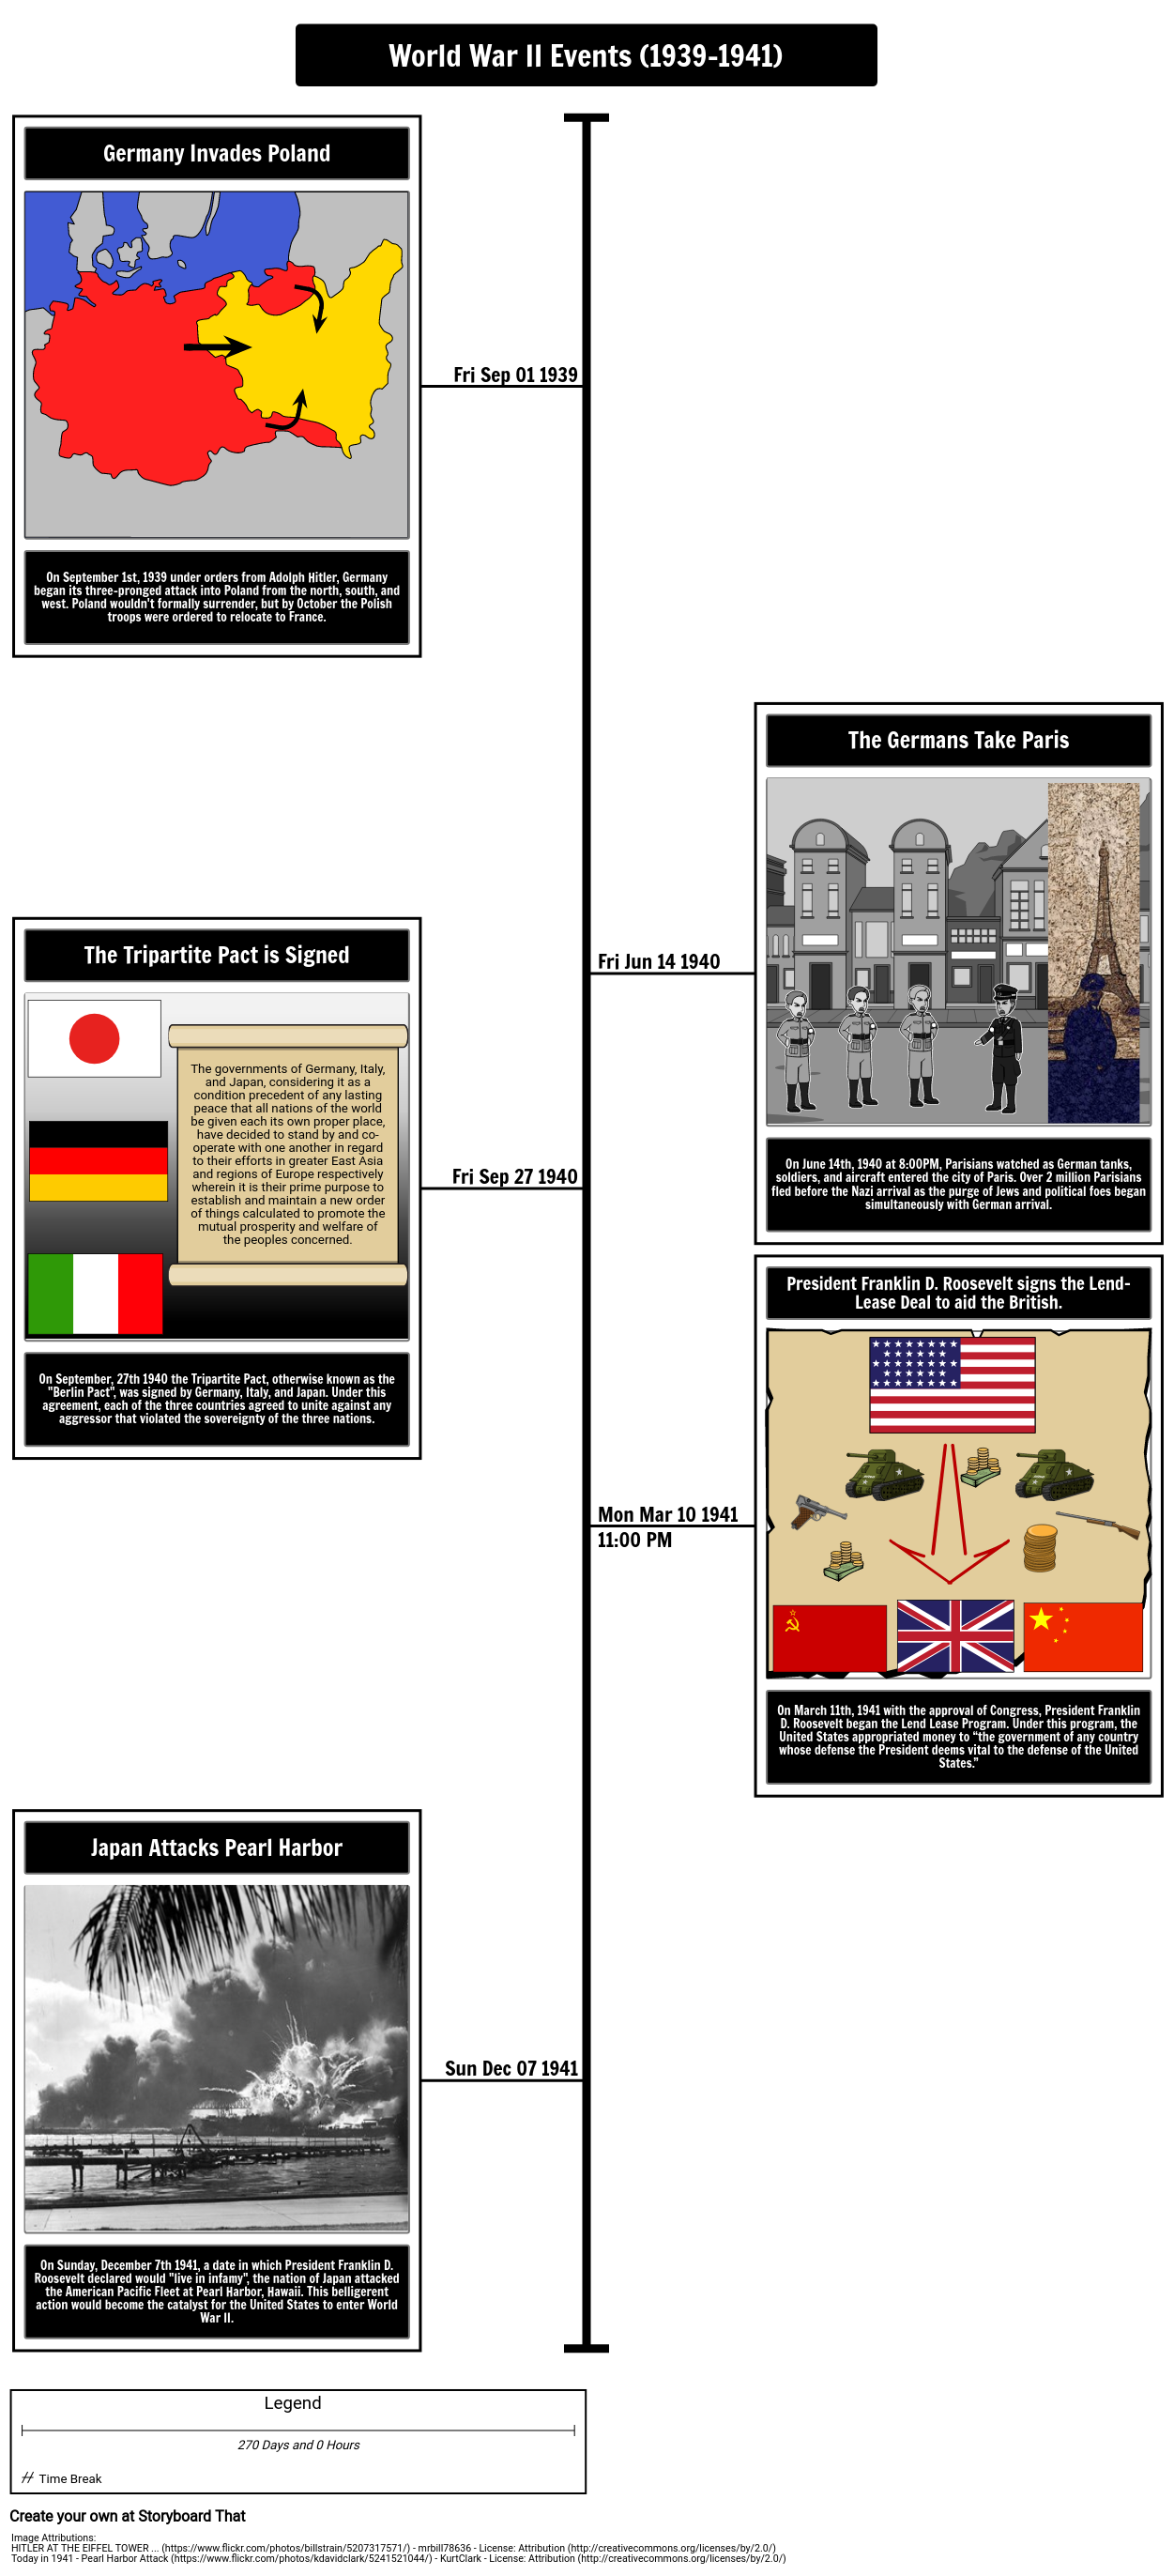 World War 2 Timeline 1939-1941